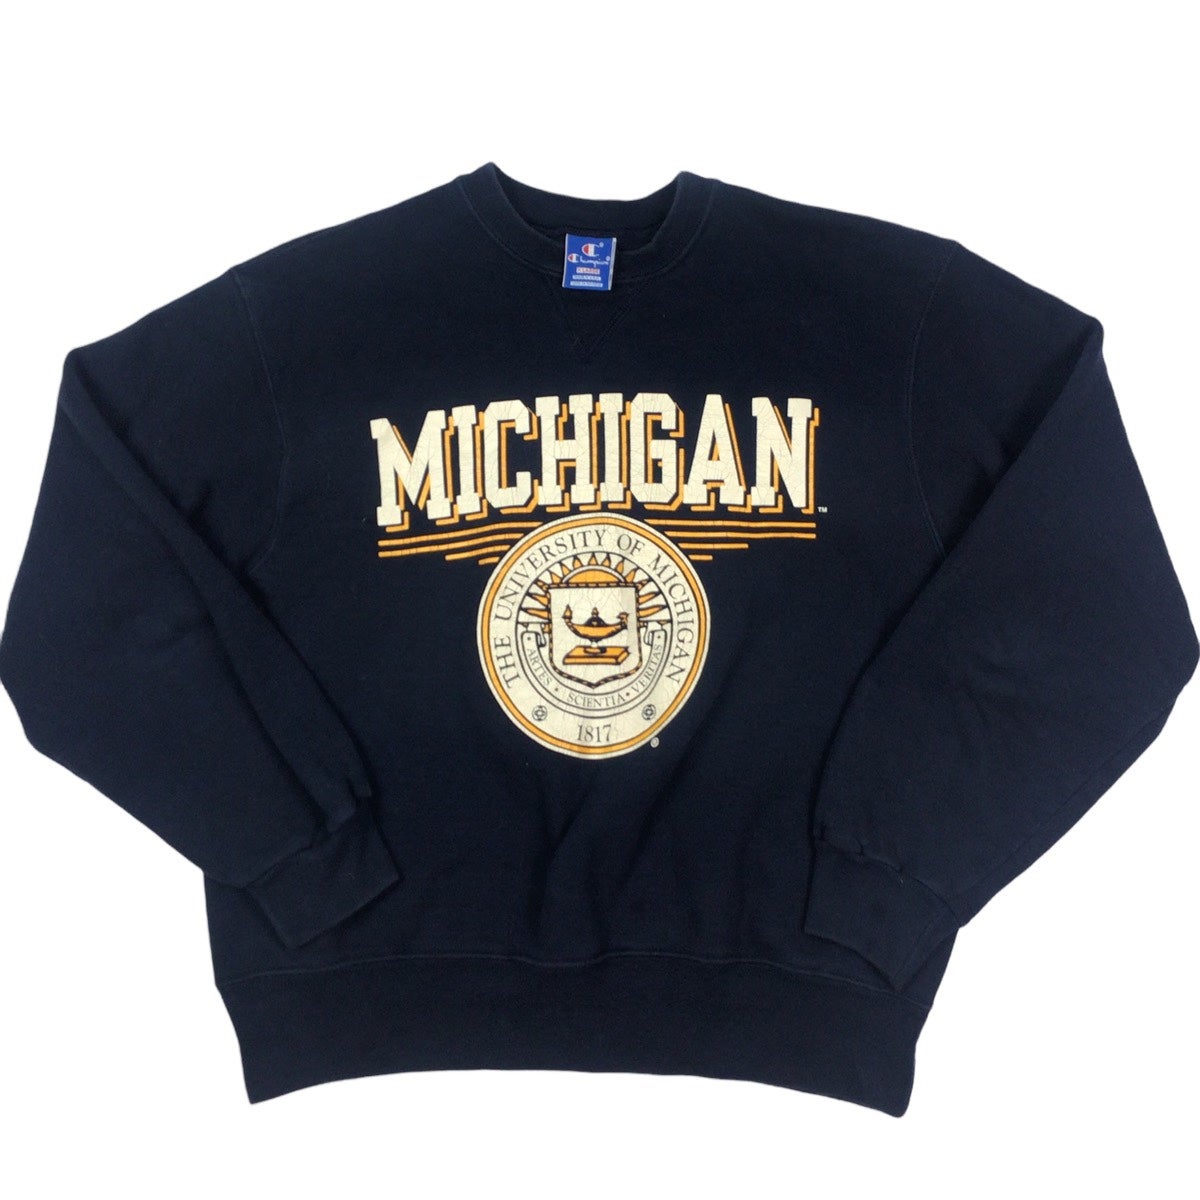 Vintage 90s Champion Michigan Wolverines Crewneck sweatshirt. Deep